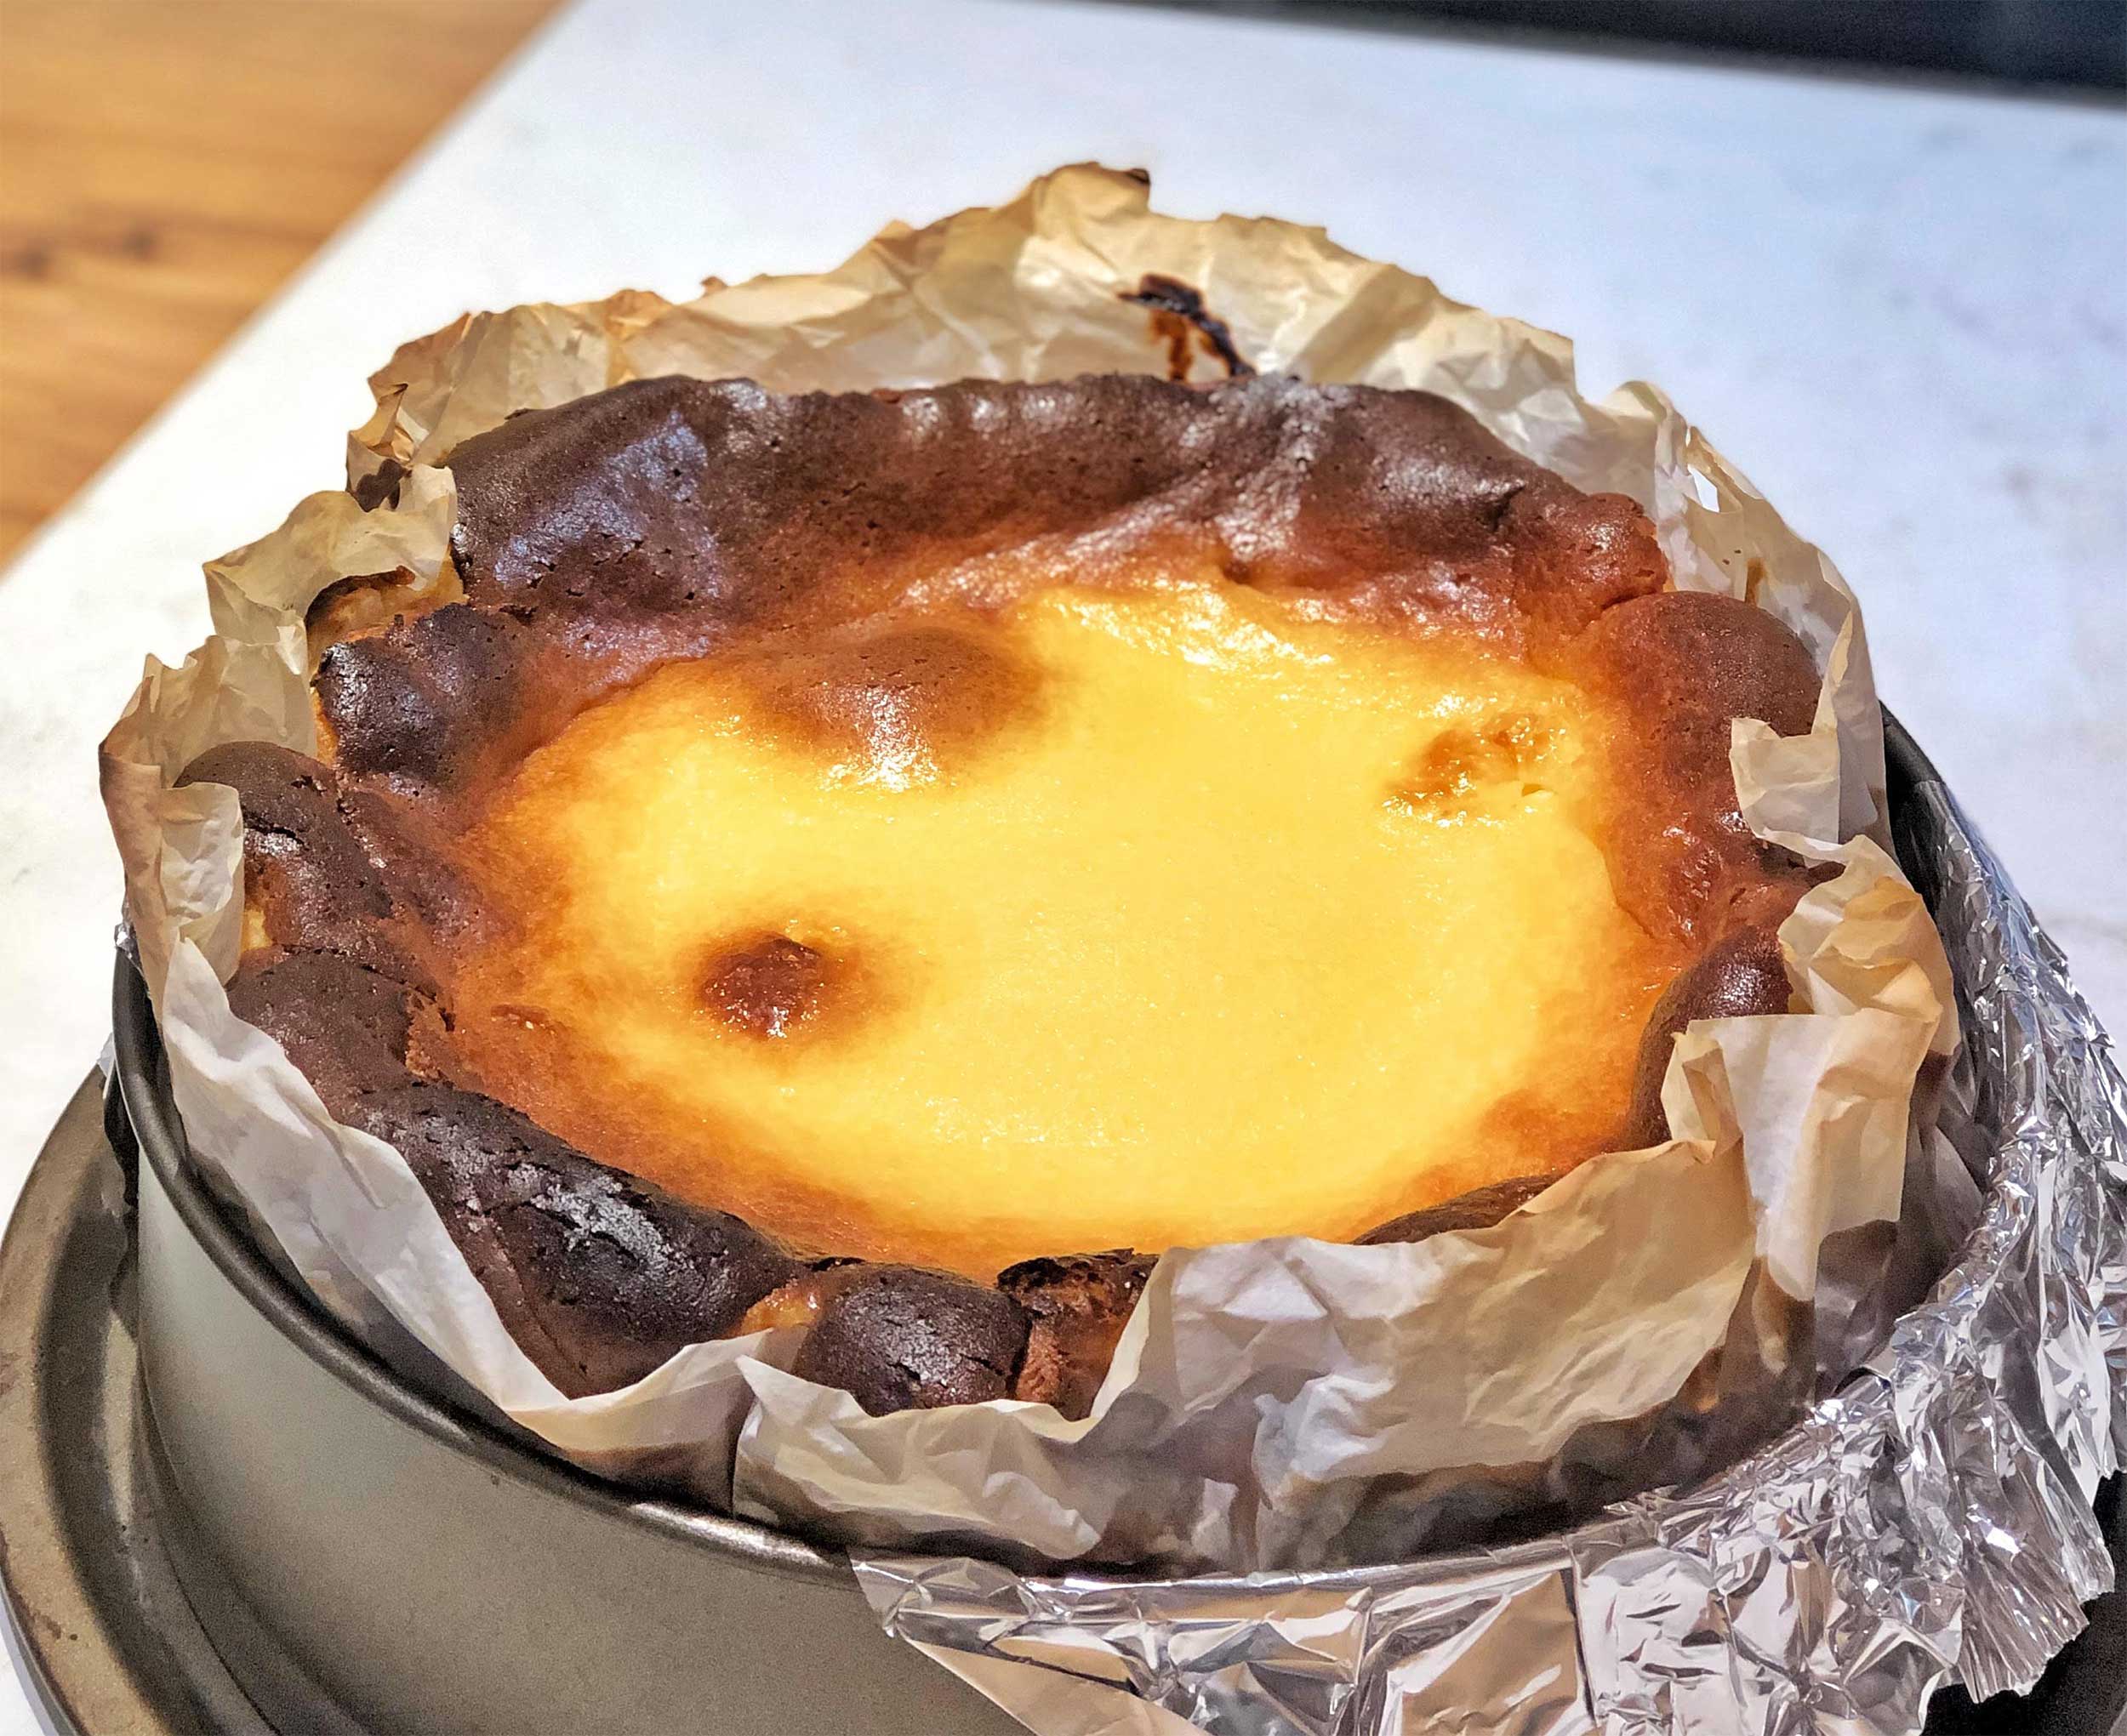 The Basque cheesecake, irreplicable!